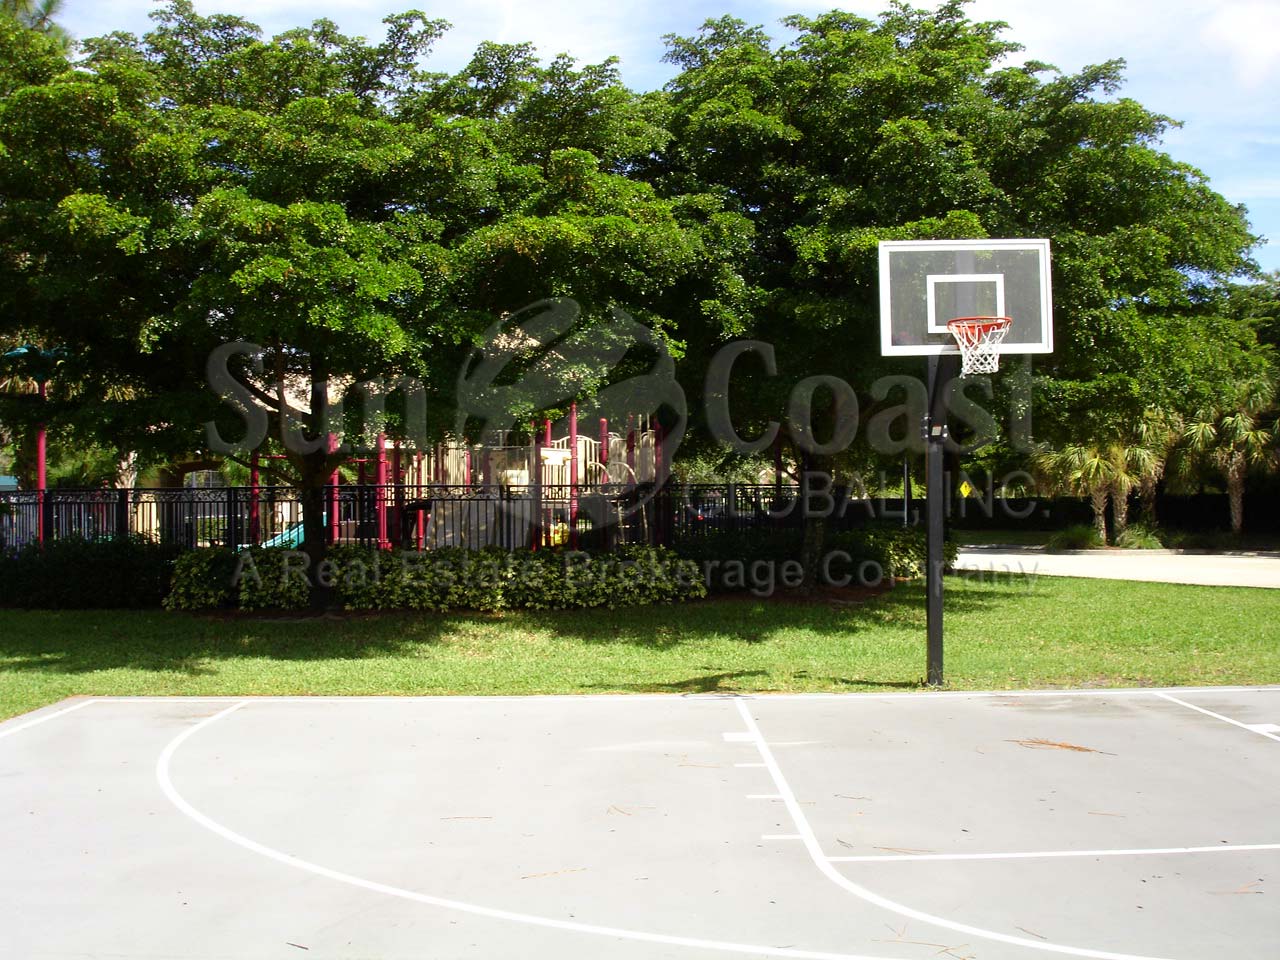 SATURNIA LAKES Basketball Court